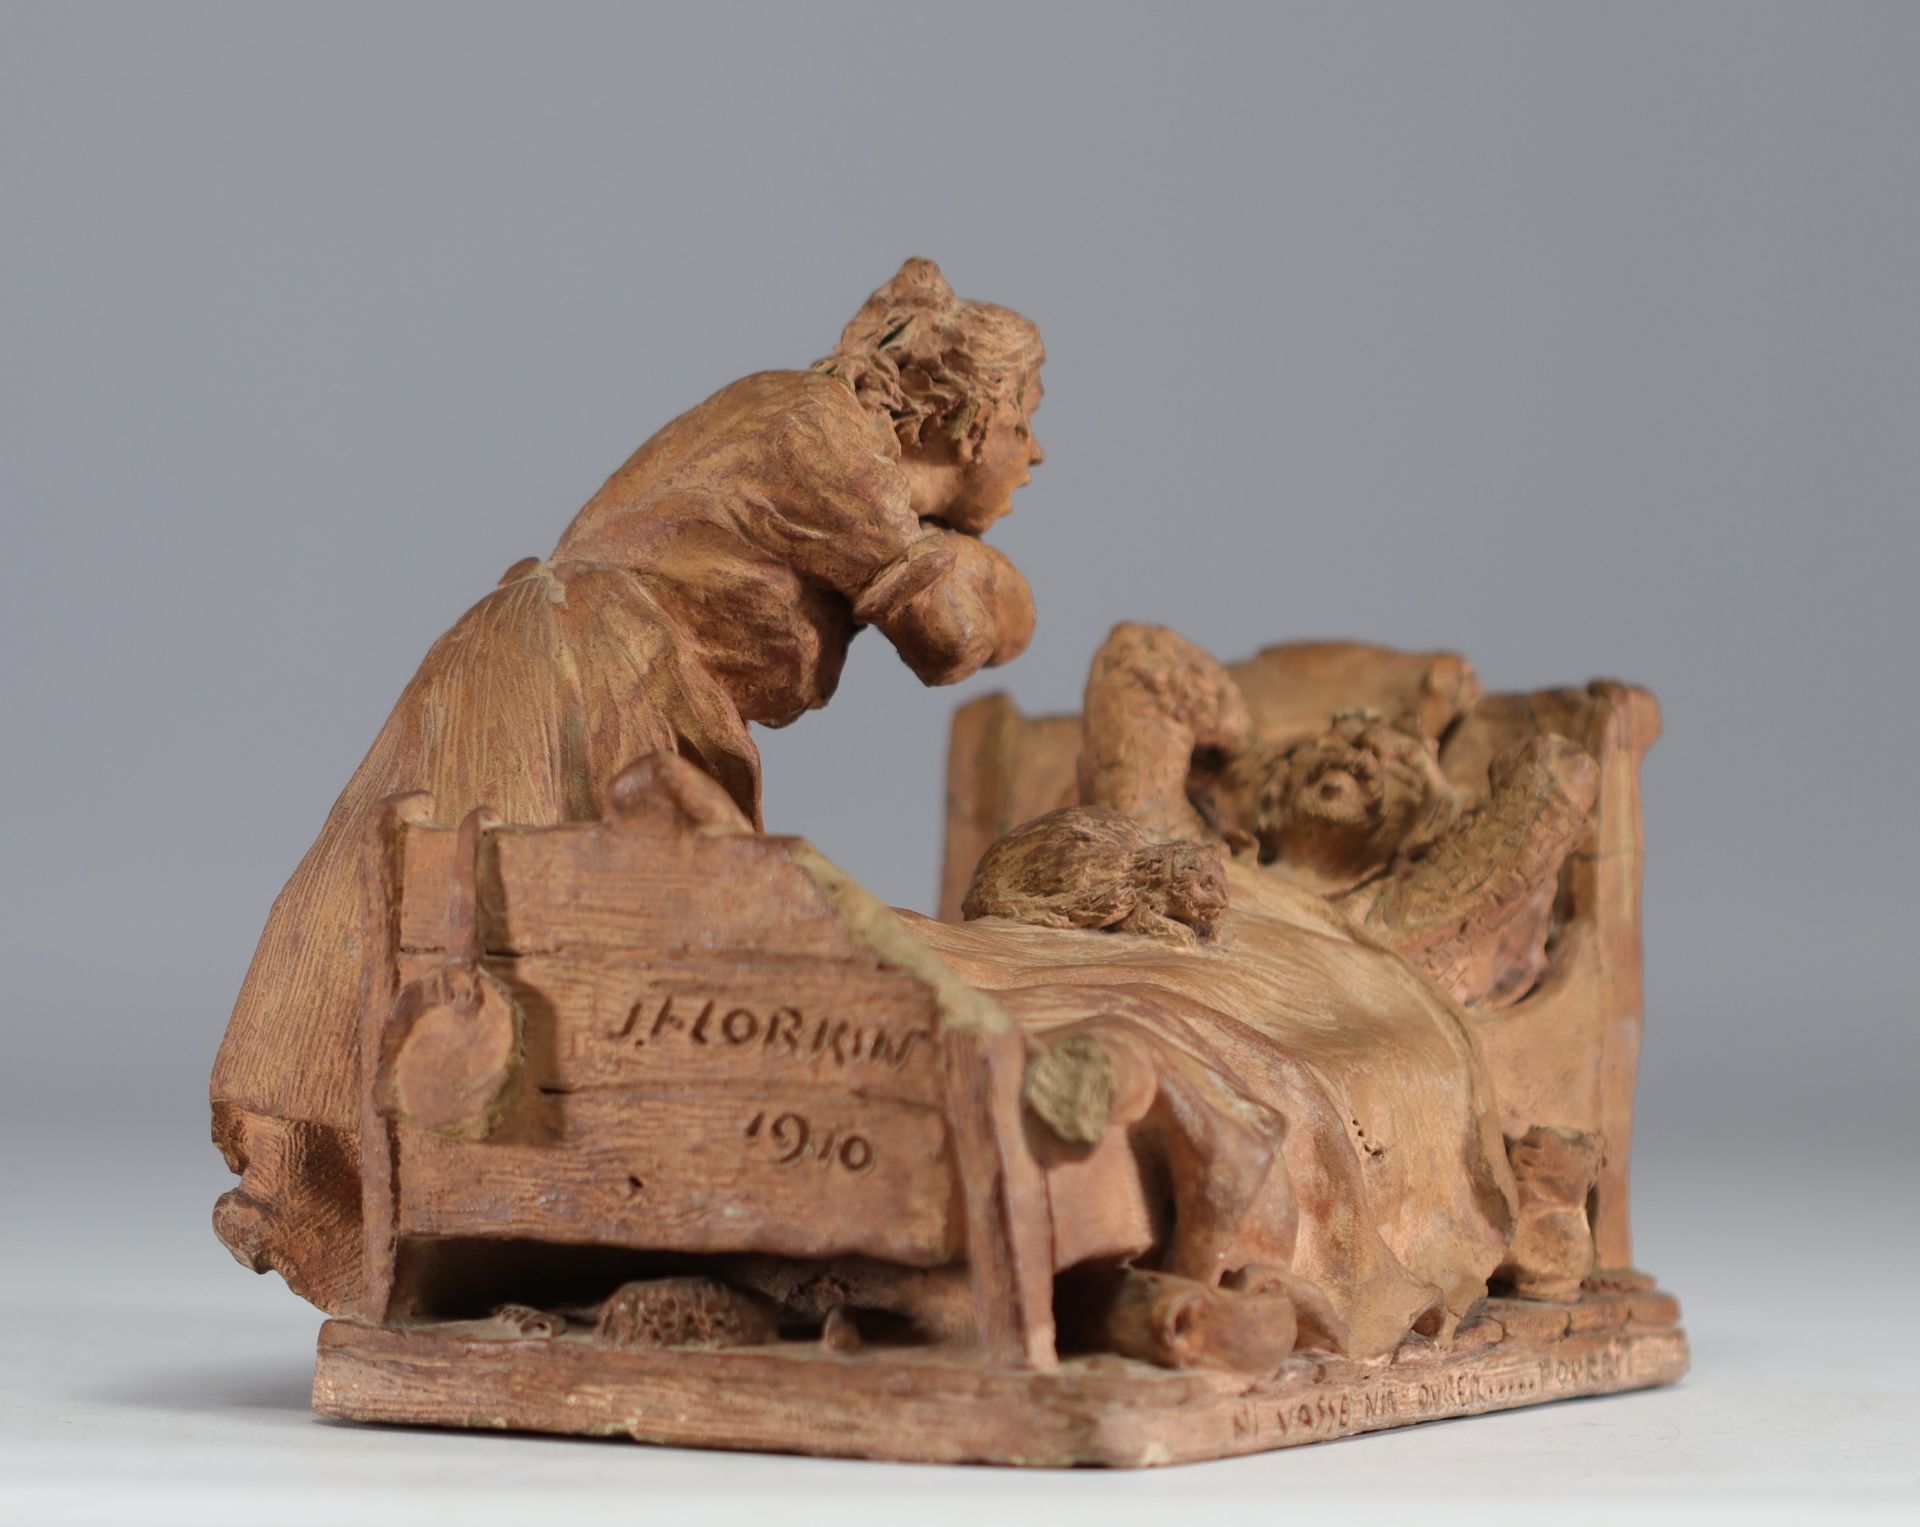 Jean FLORKIN (1876-?) "Ni vasse nin ovrer....pourri?" Terracotta sculpture. - Image 2 of 3